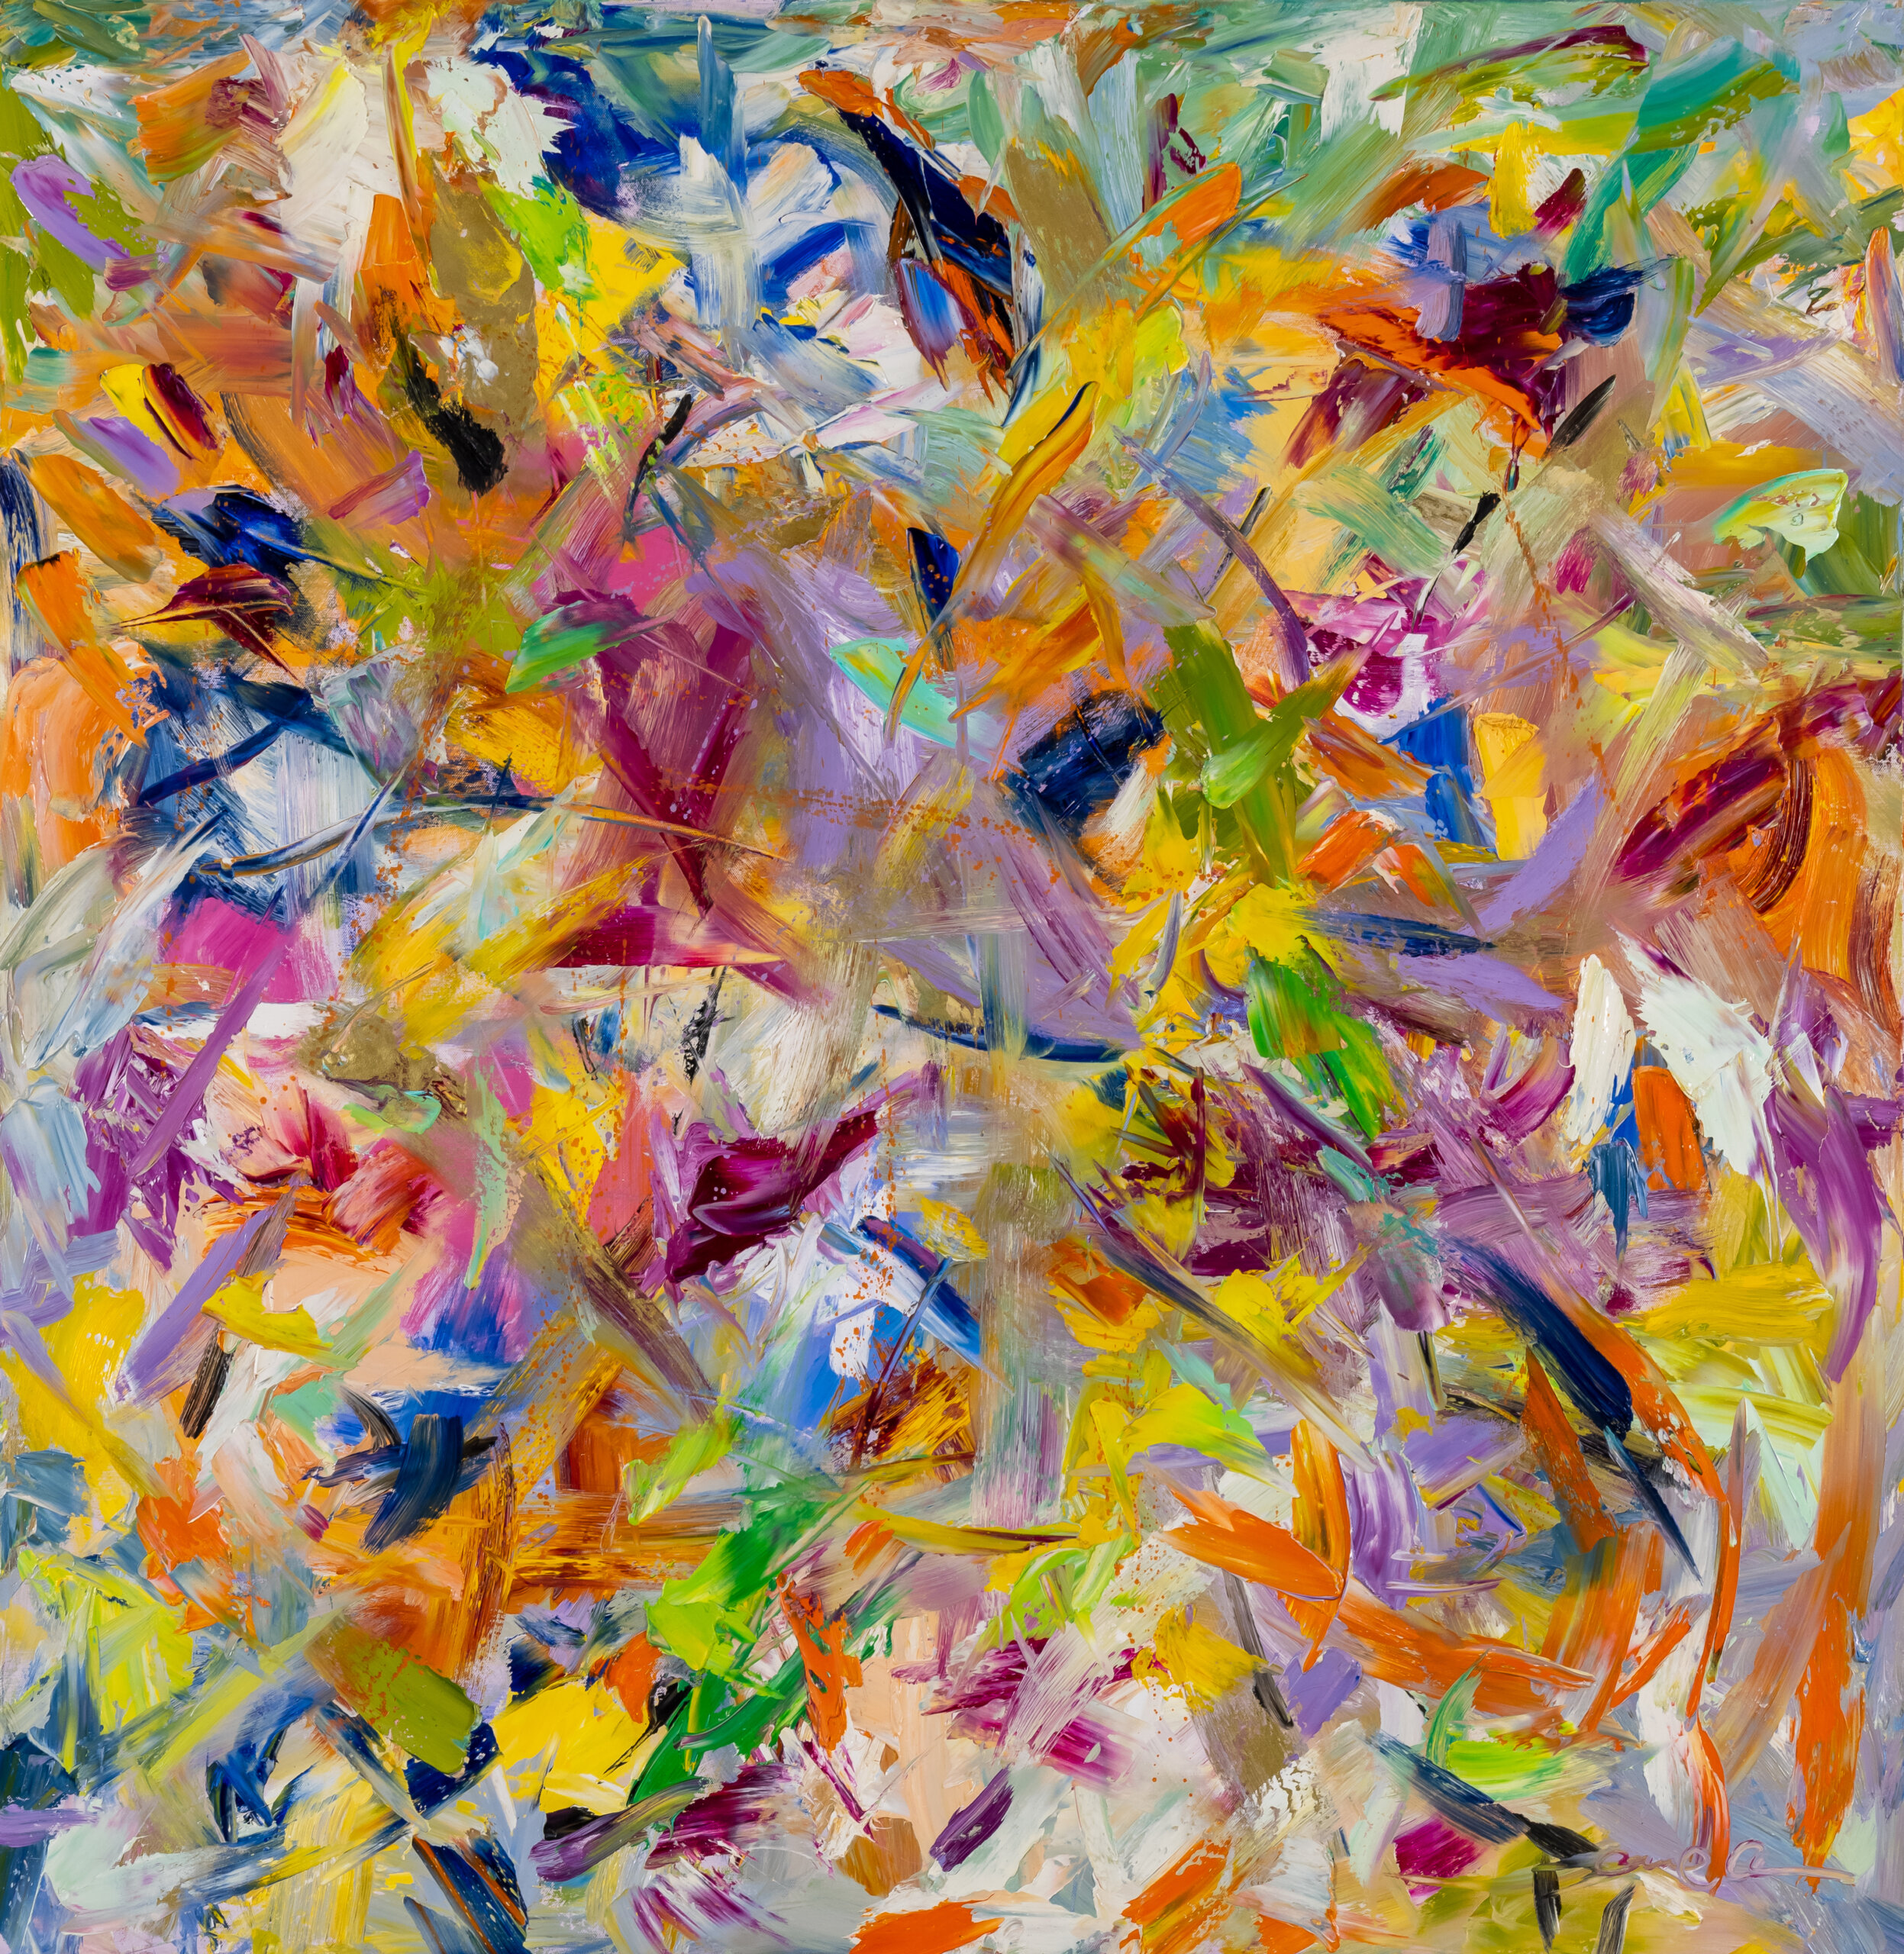 Carol Calicchio's "Hummingbirds in Paradise" (oil on canvas, 48” x 48”)